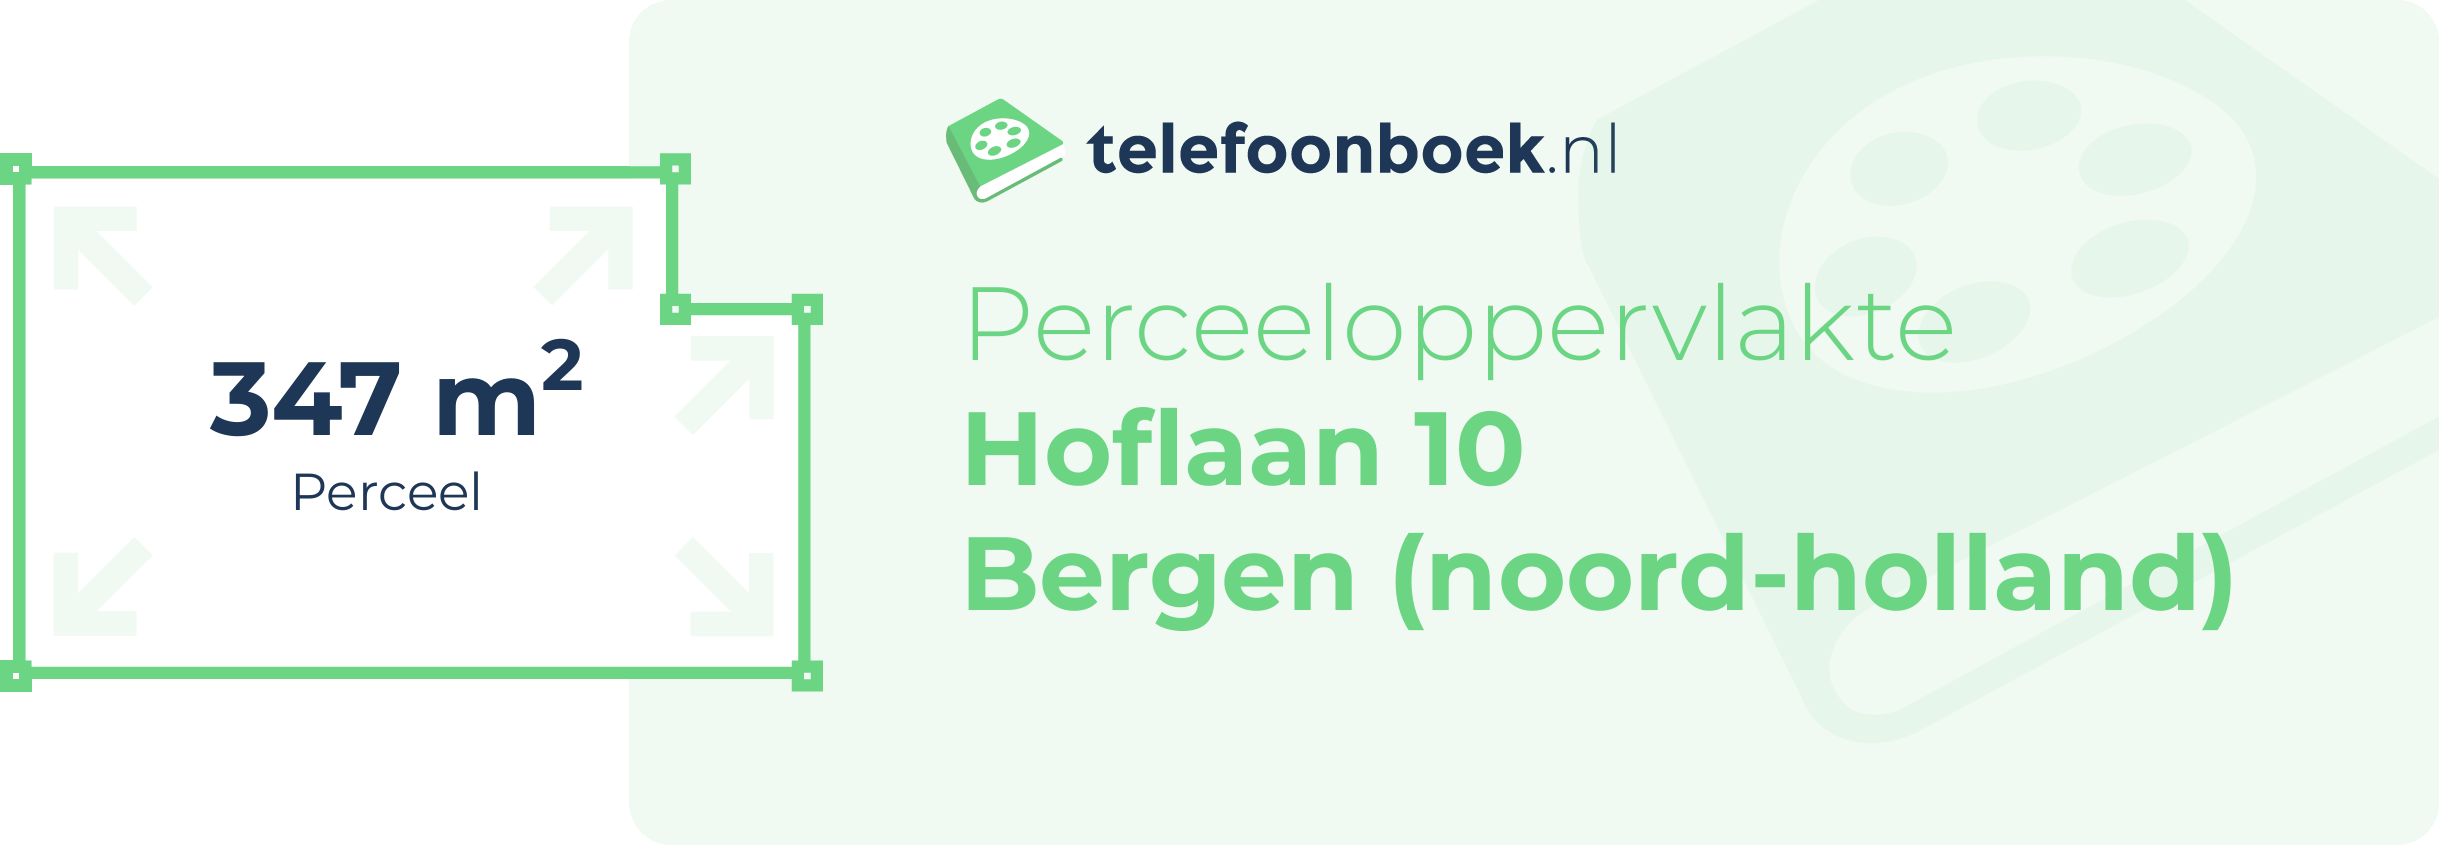 Perceeloppervlakte Hoflaan 10 Bergen (Noord-Holland)